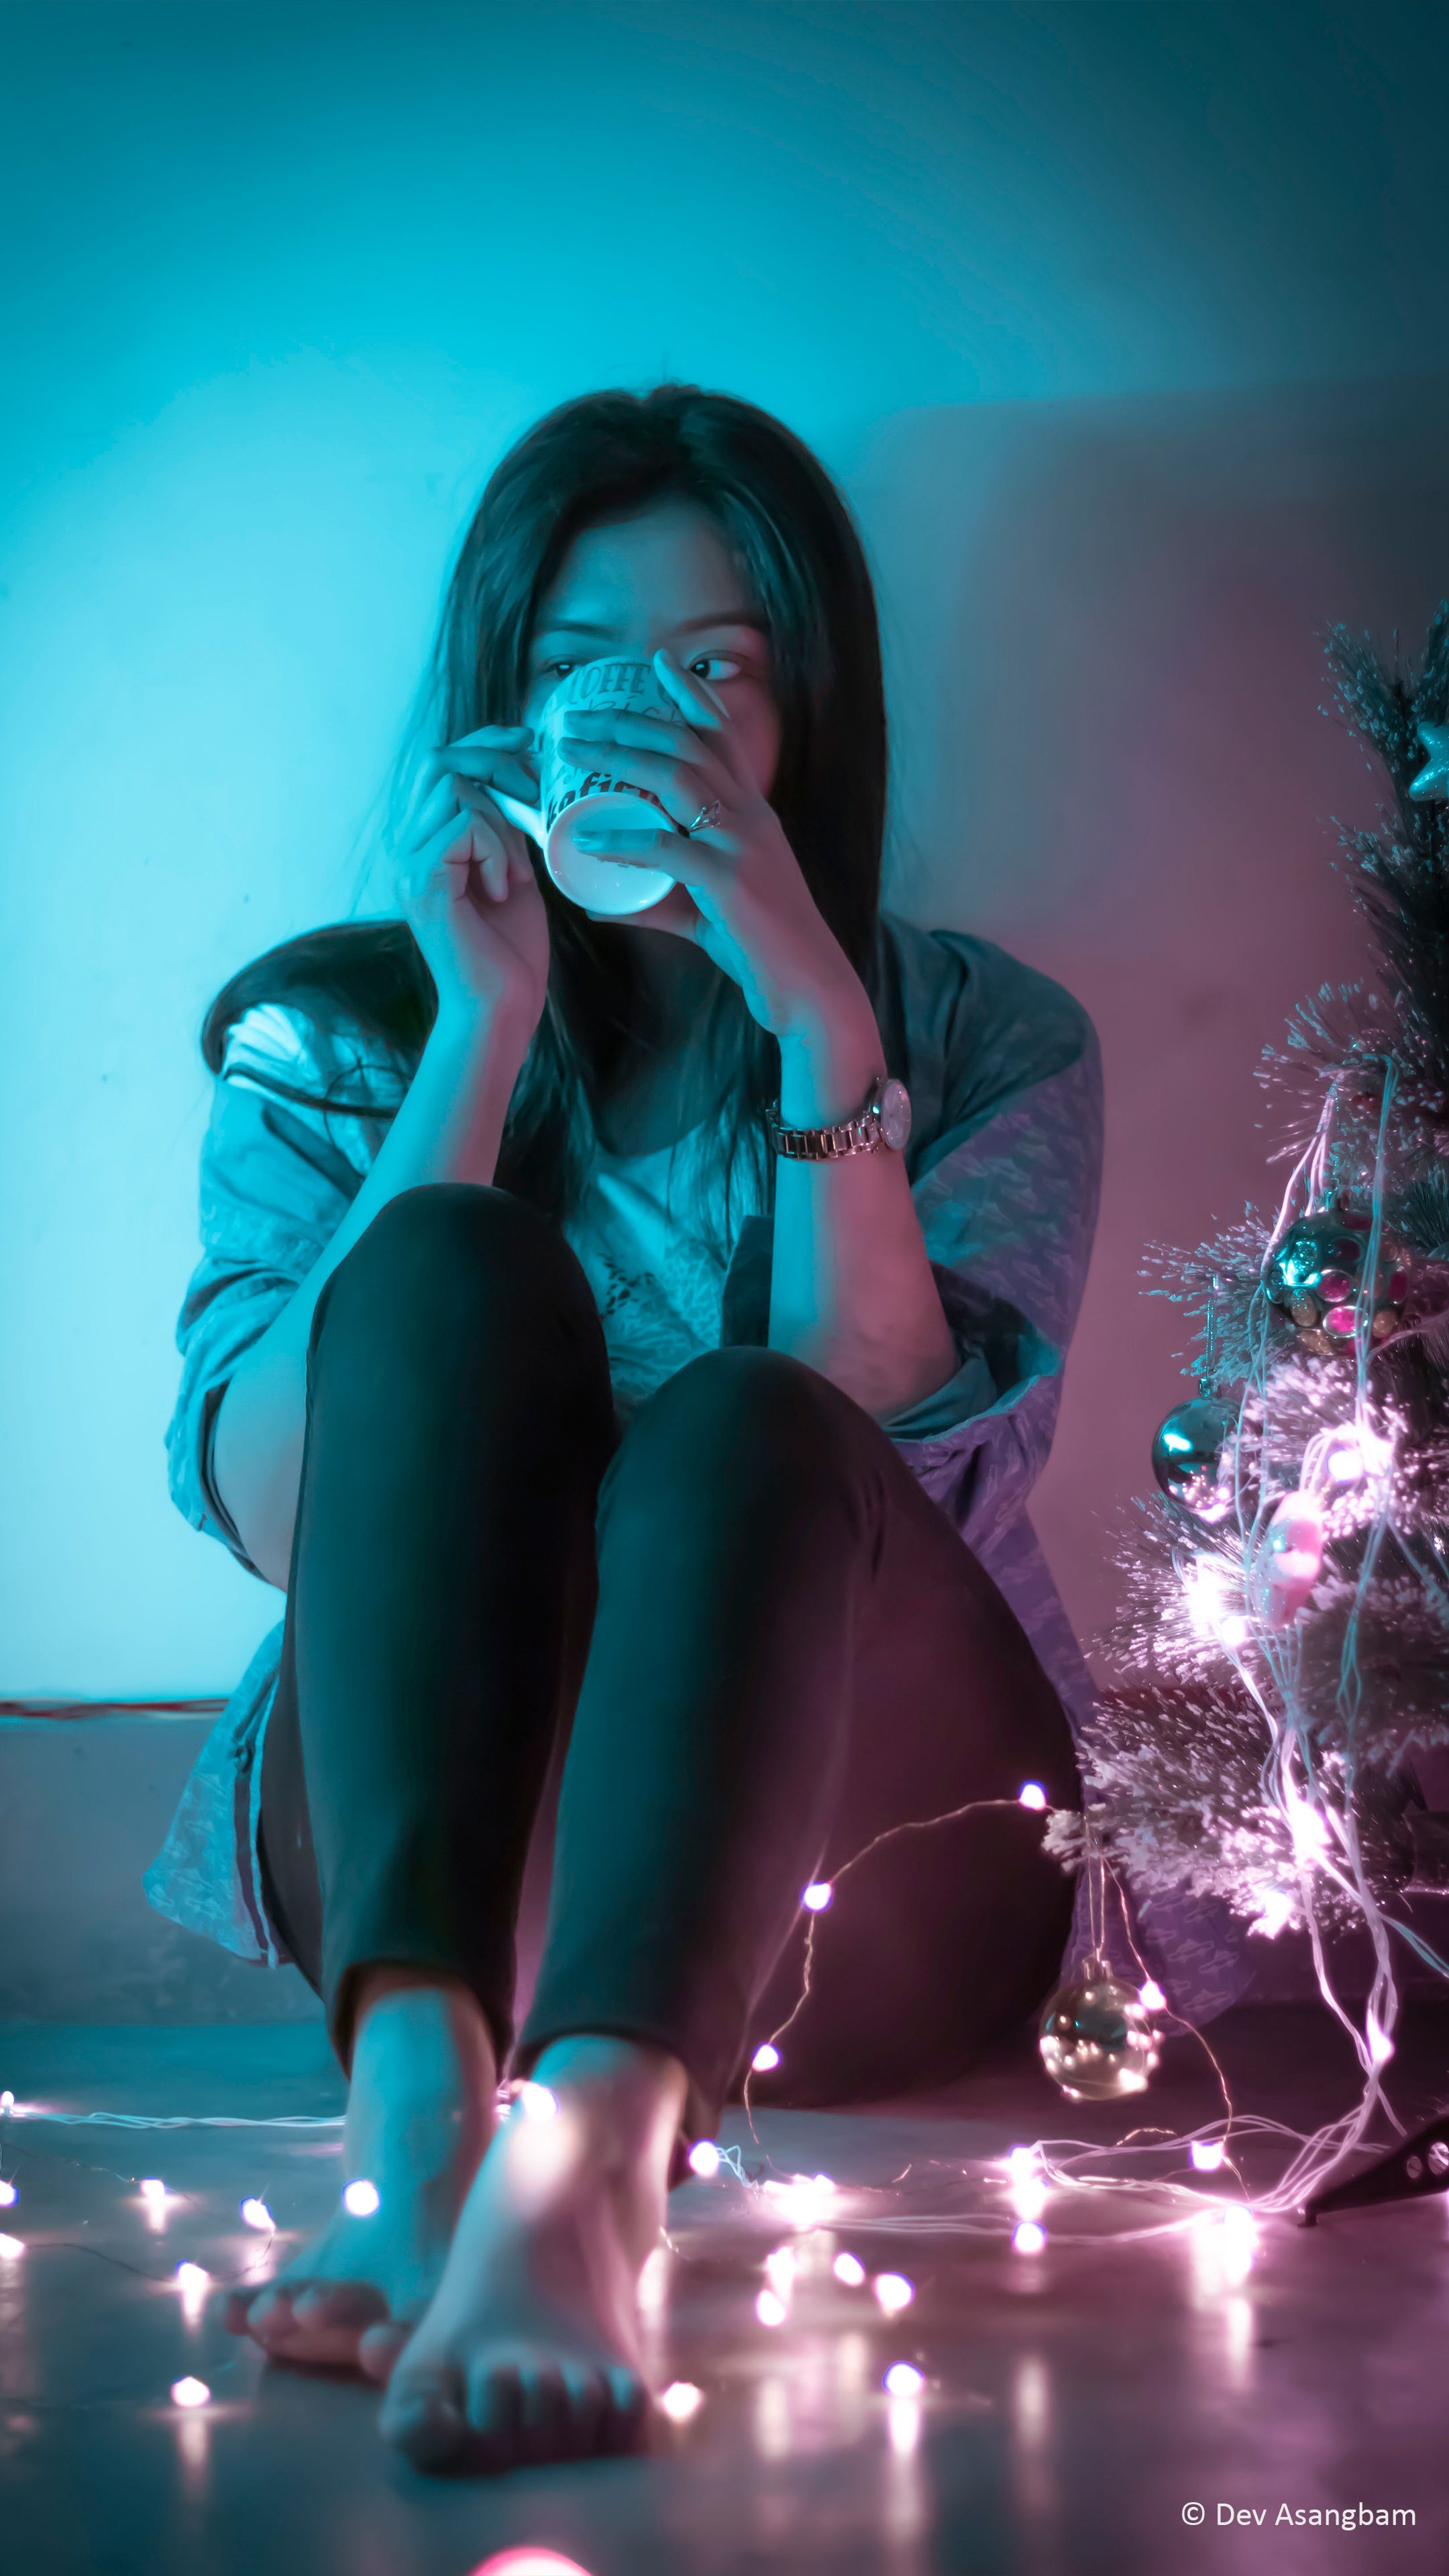 Cute Girl Coffee Lights Christmas Tree Photography 4K Ultra HD